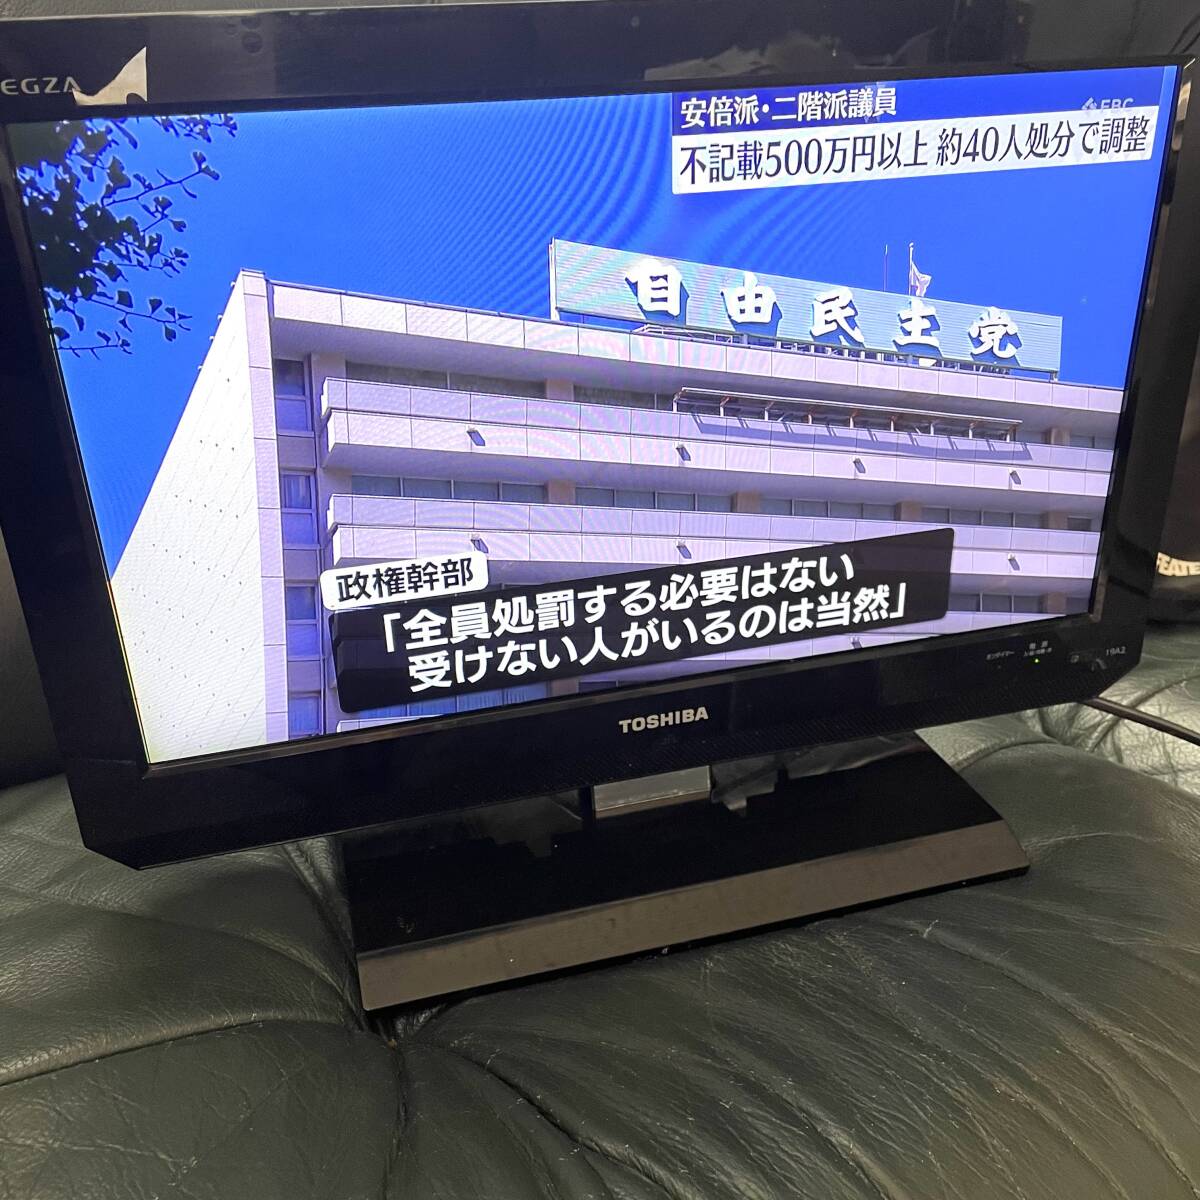 TOSHIBA REGZA 液晶テレビ 19V型 19A2 レグザ 東芝 液晶カラーテレビ リモコン無 【2011年製】の画像1